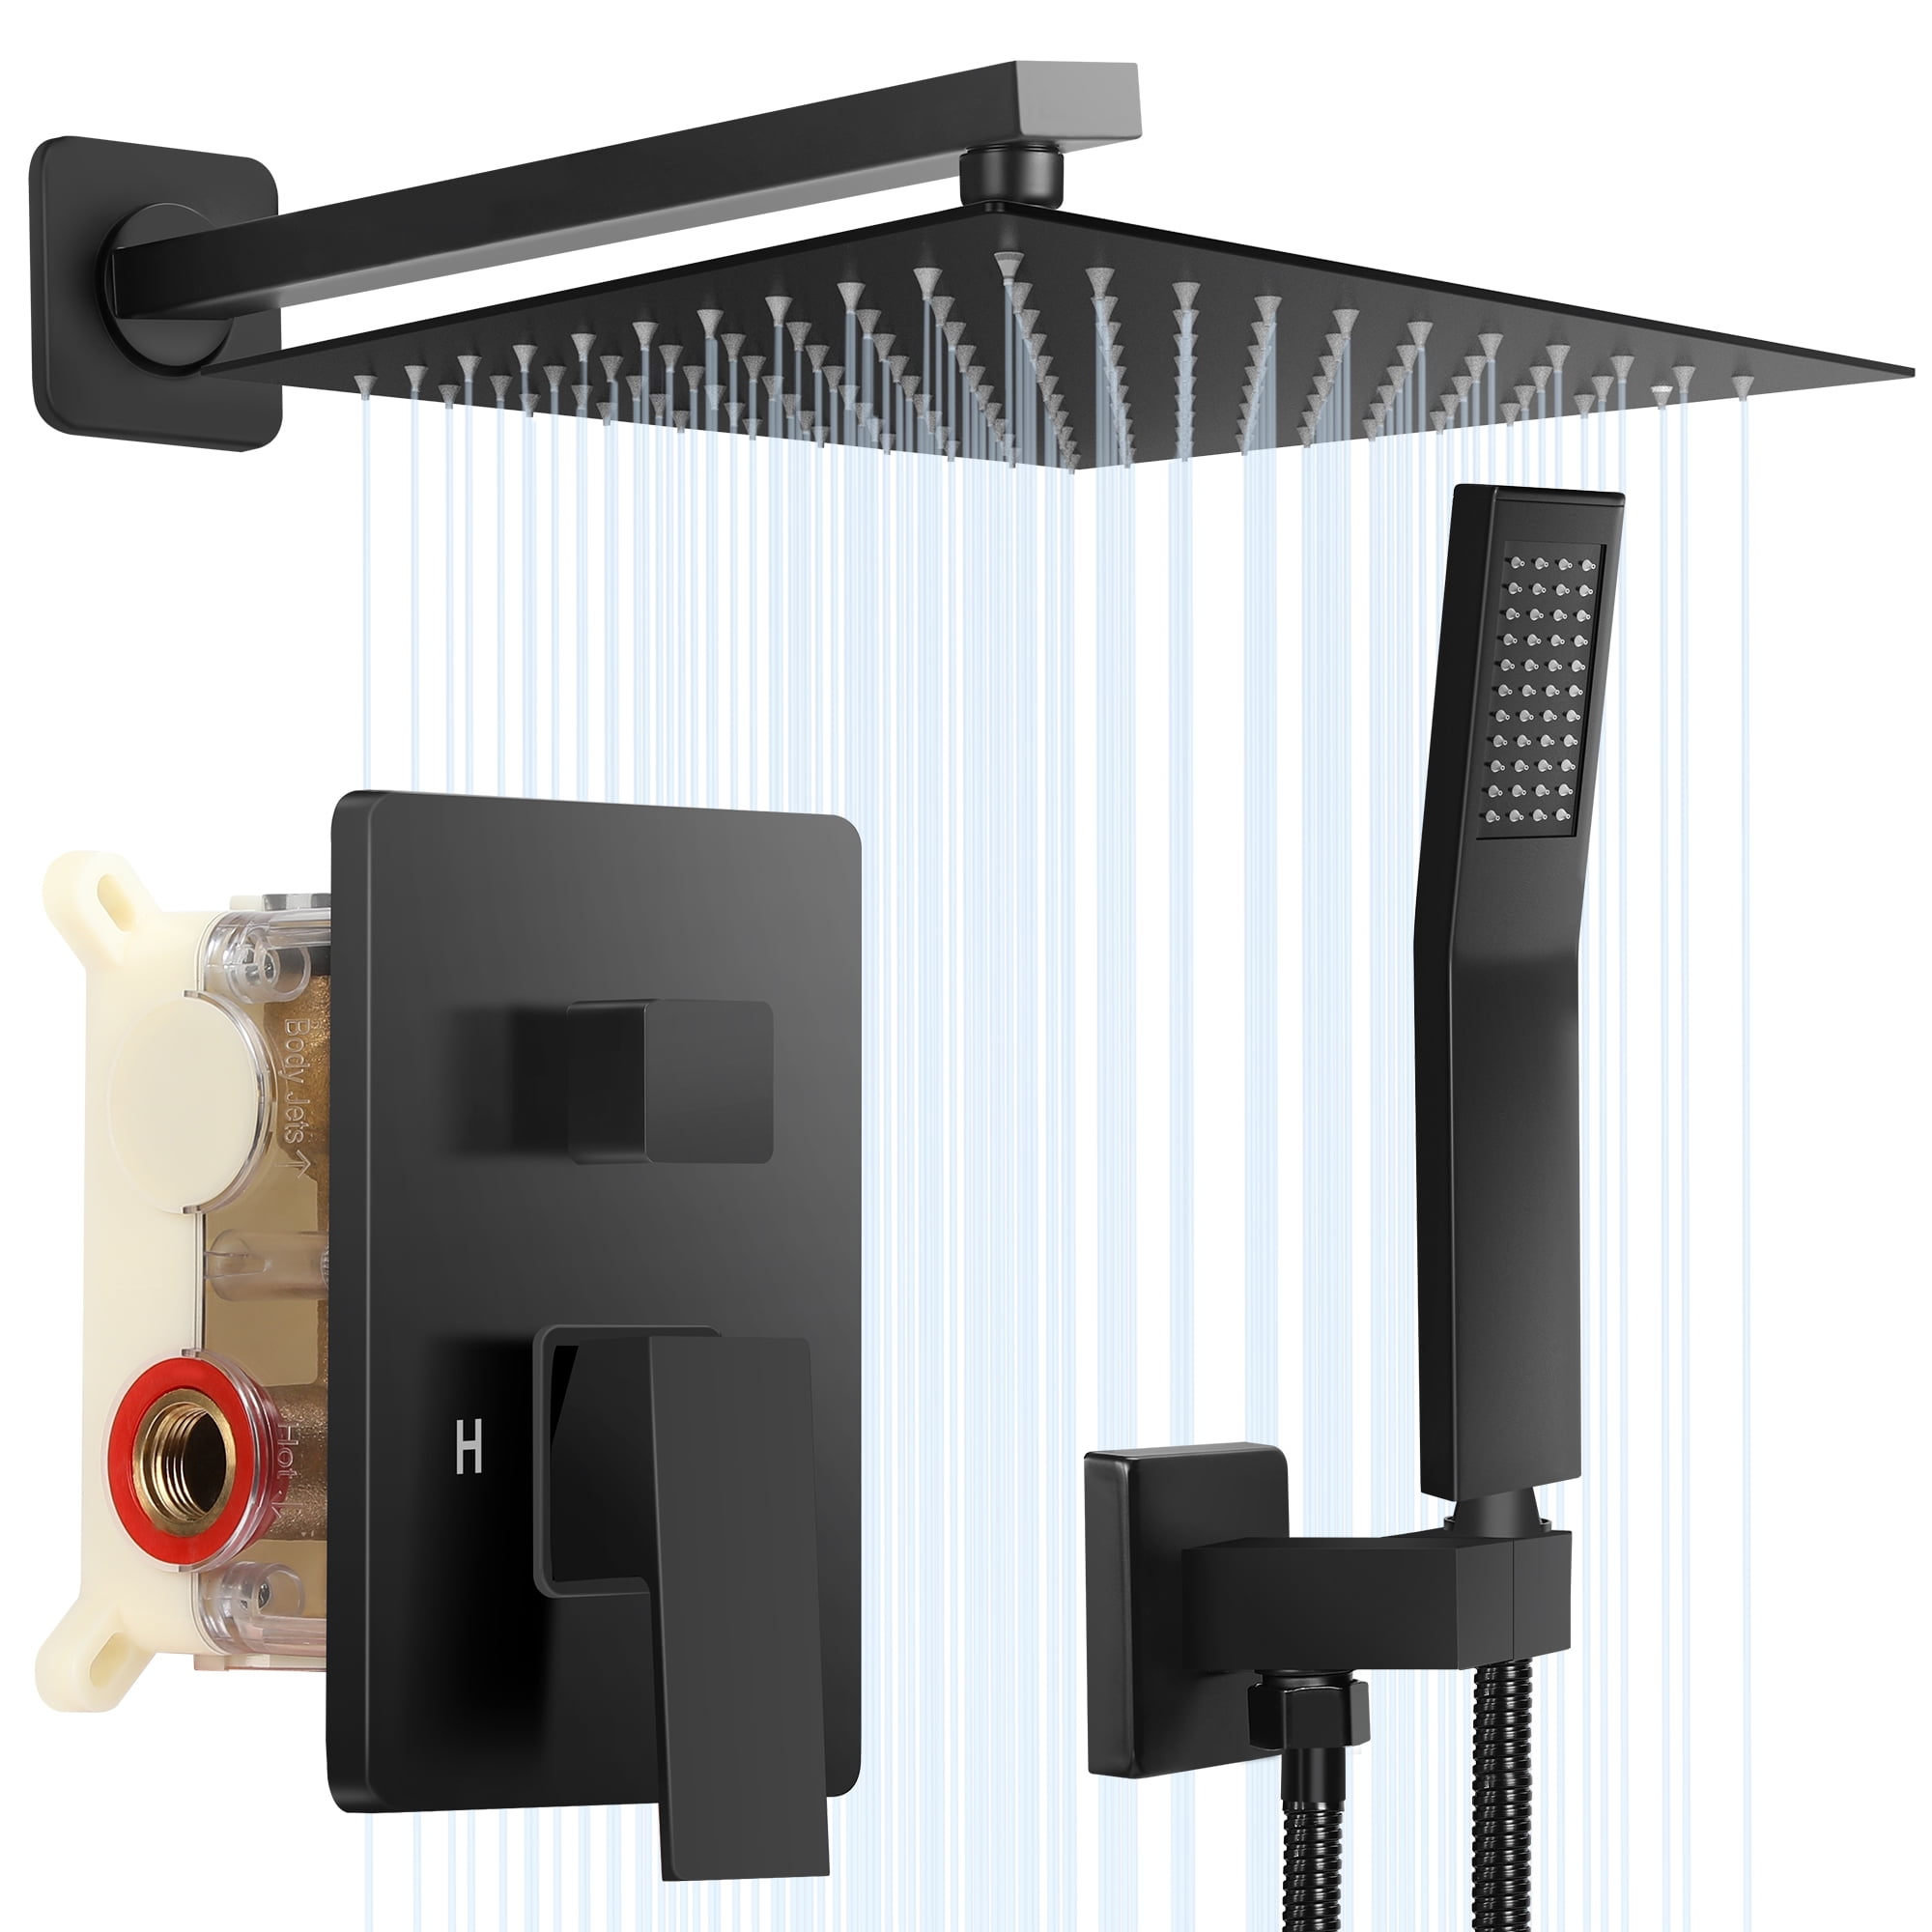 EVERSTEIN Rain Shower Faucet Set Luxury 12 inch Shower Head Thermostatic  CUCP 2.5 GPM Shower System with 6 Massage Body Jets and Handheld Sprayer,  Matte Black 